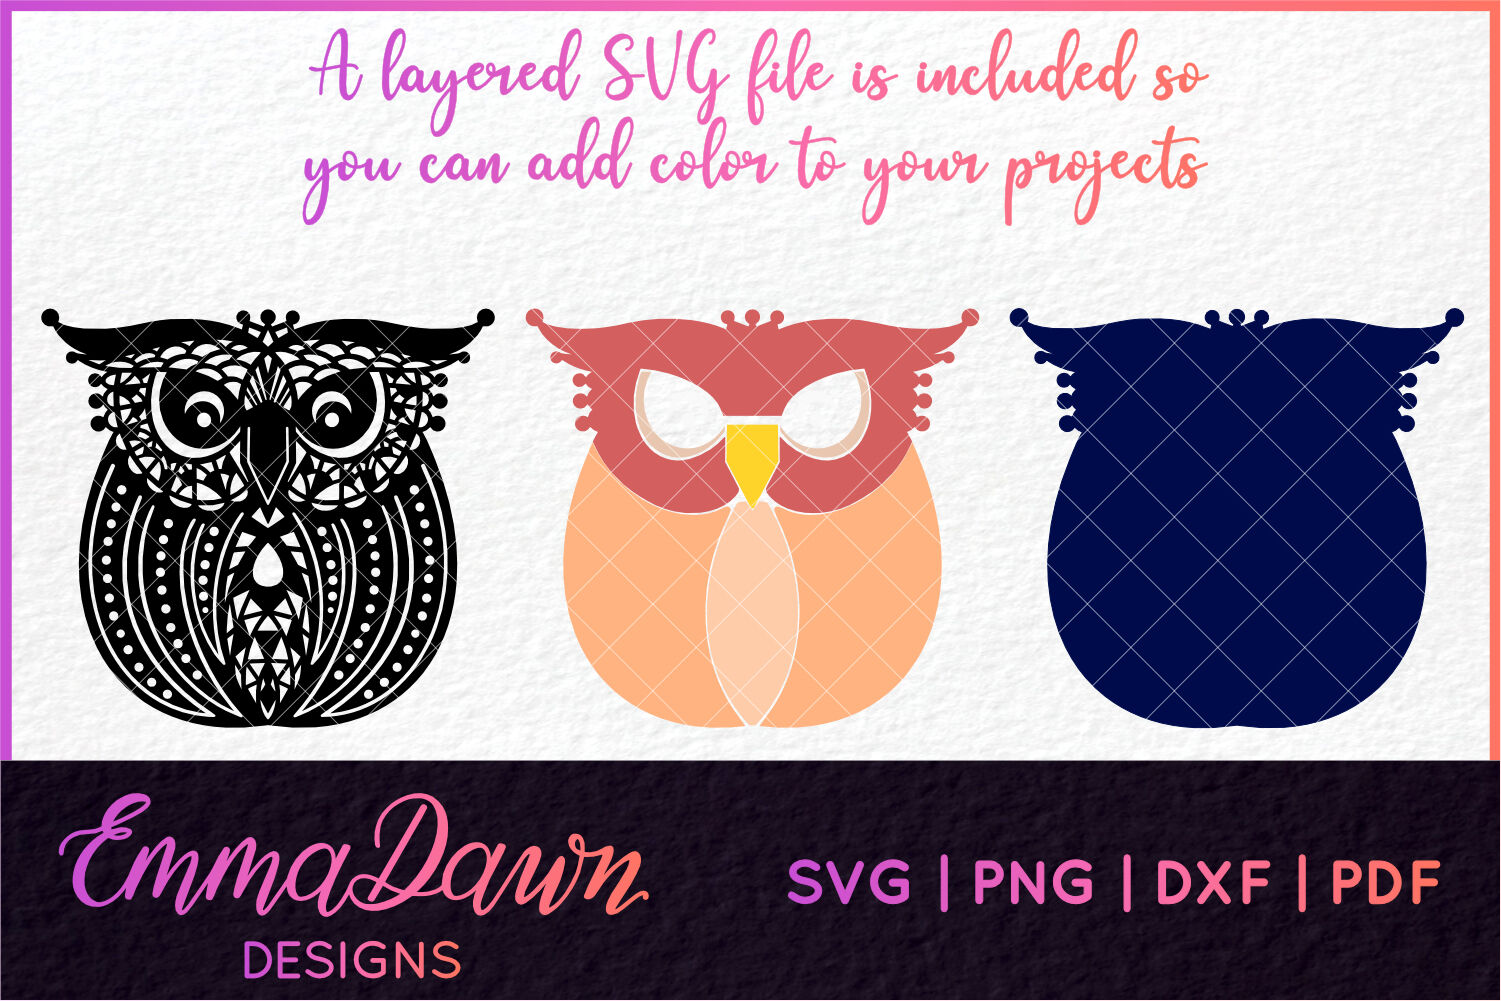 Download Gary The Wise Owl Mandala Zentangle Design Svg By Emma Dawn Designs Thehungryjpeg Com